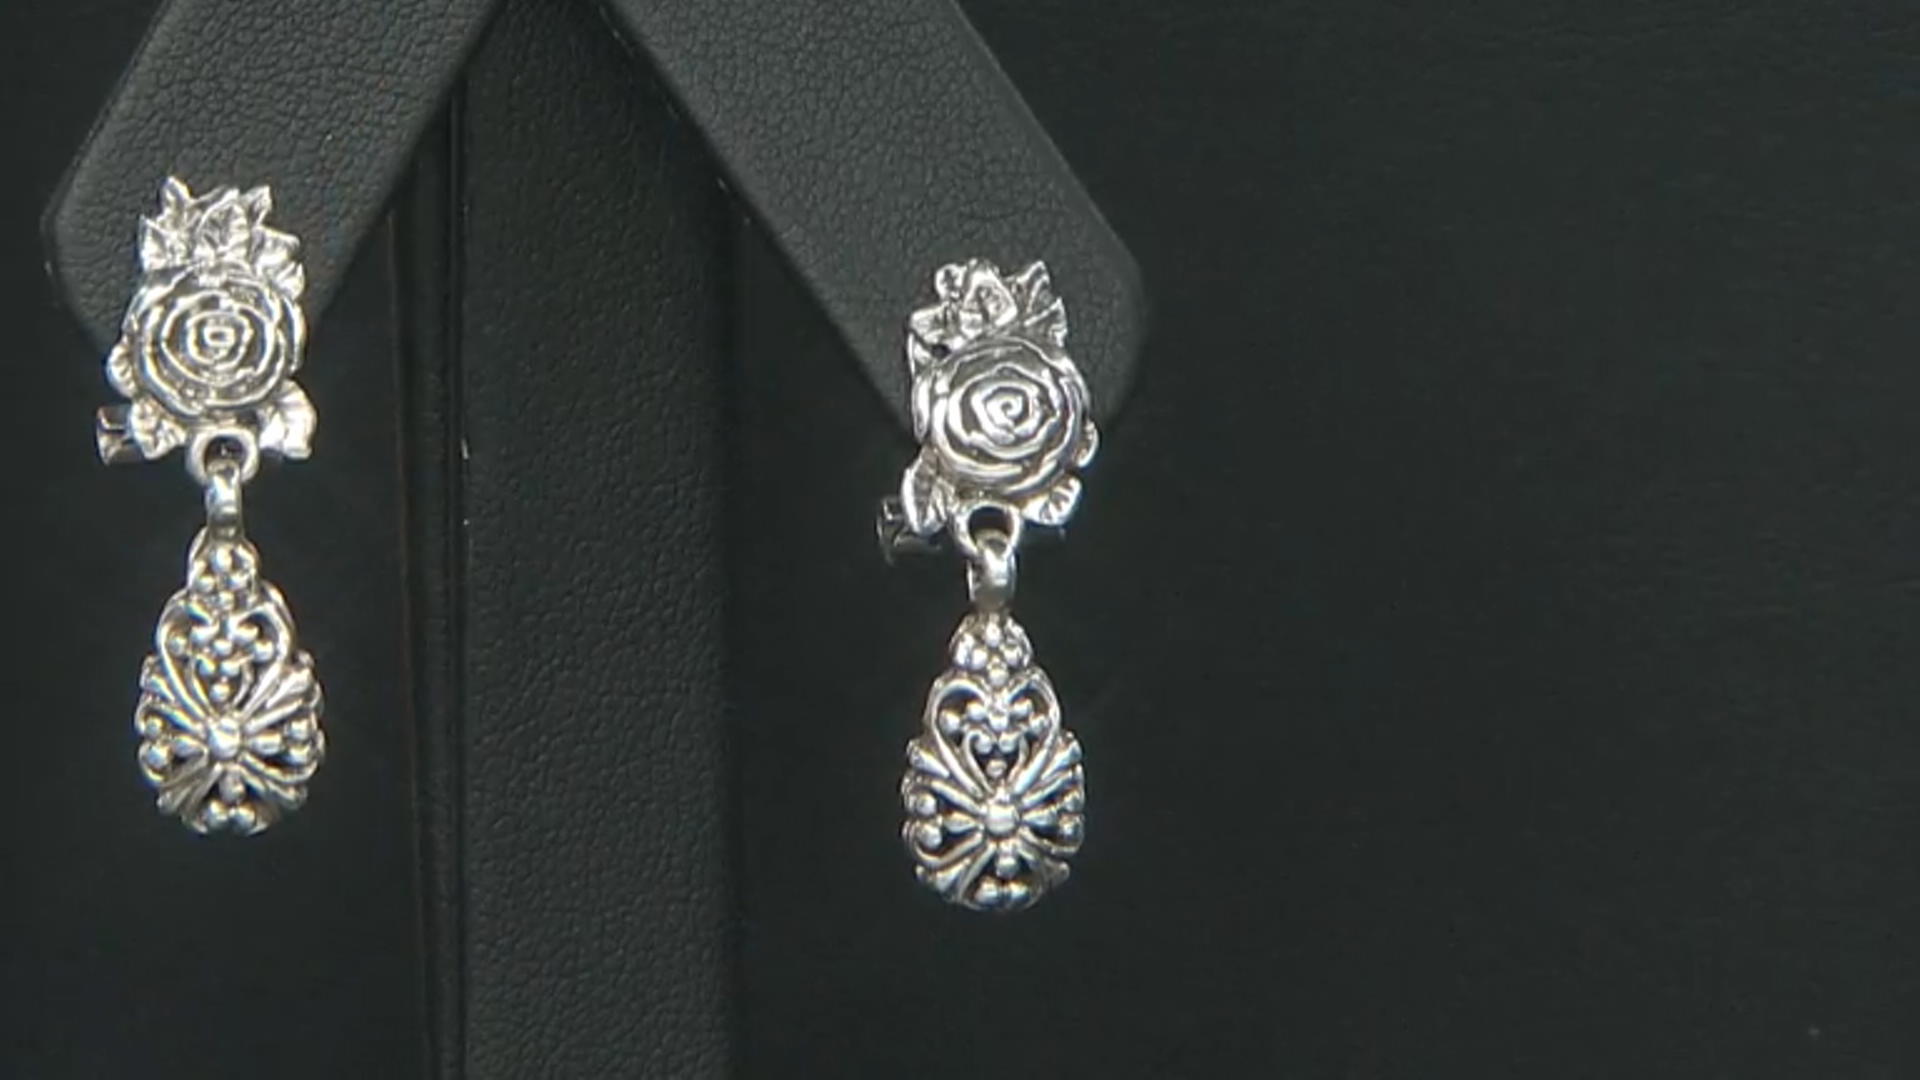 Sterling Silver Rose Dangle Earrings Video Thumbnail